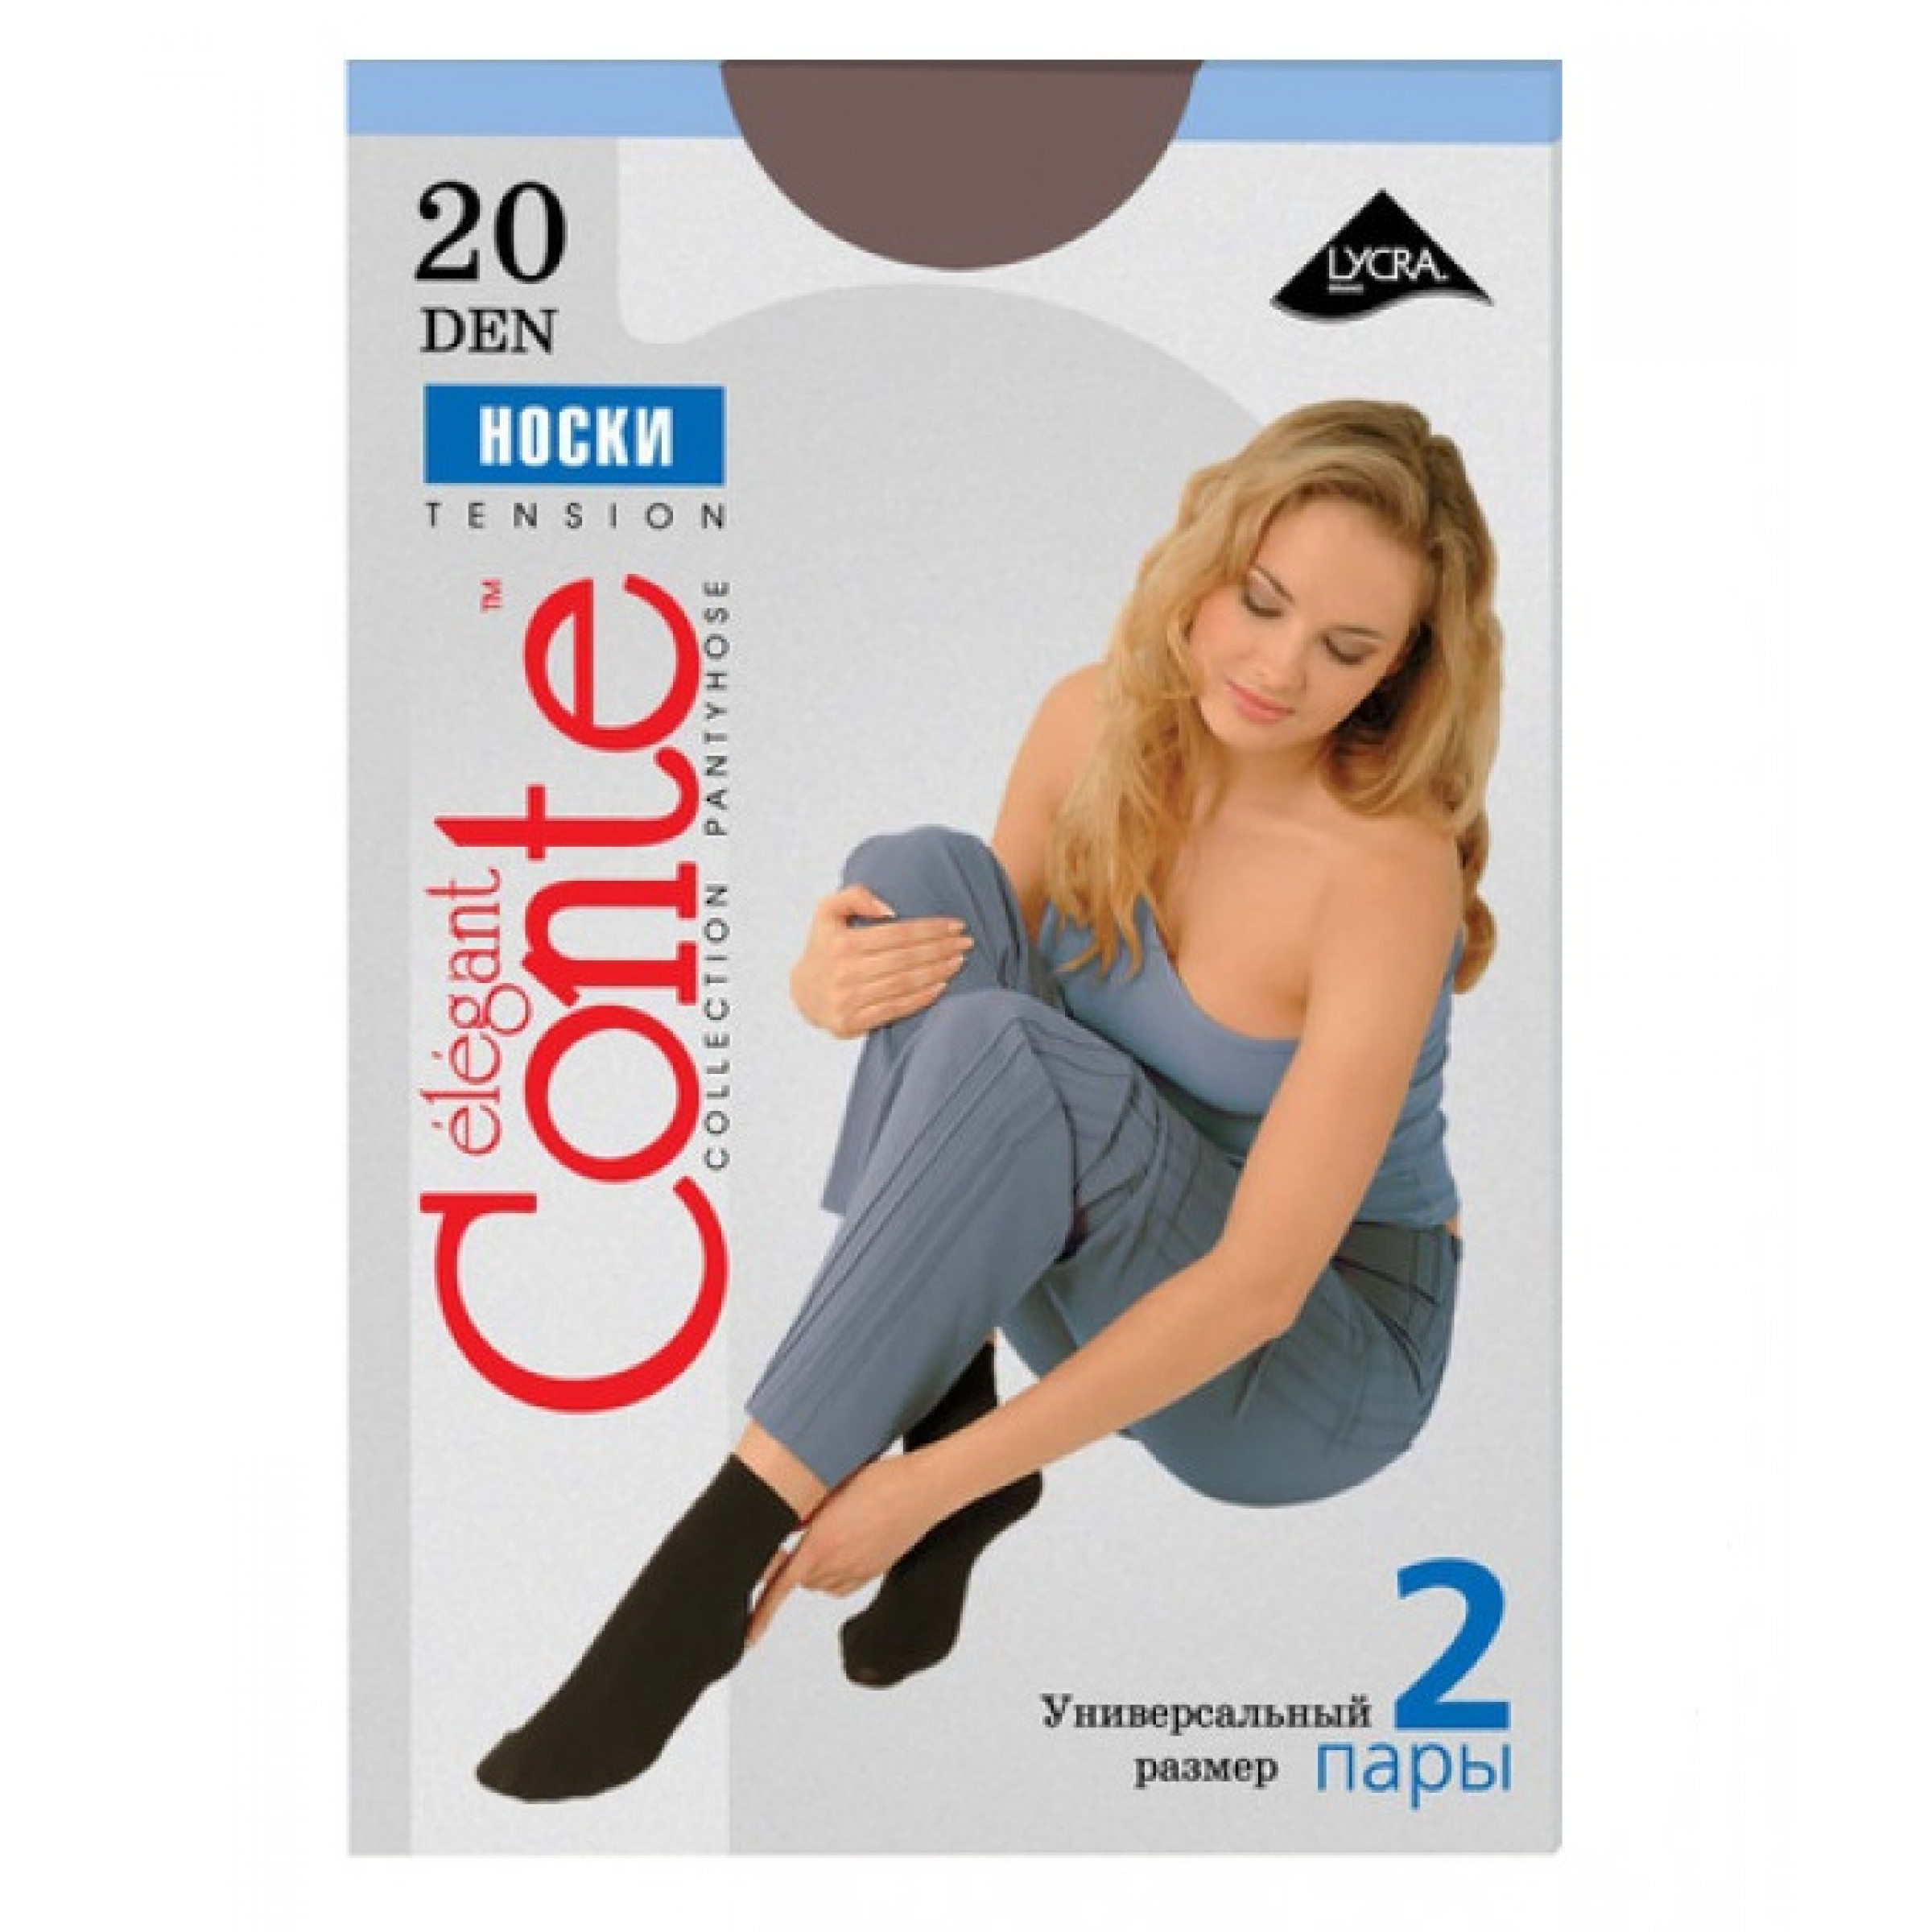 Женские носки Conte Tension 37-40 размер nero цвет 20 den 2 пары